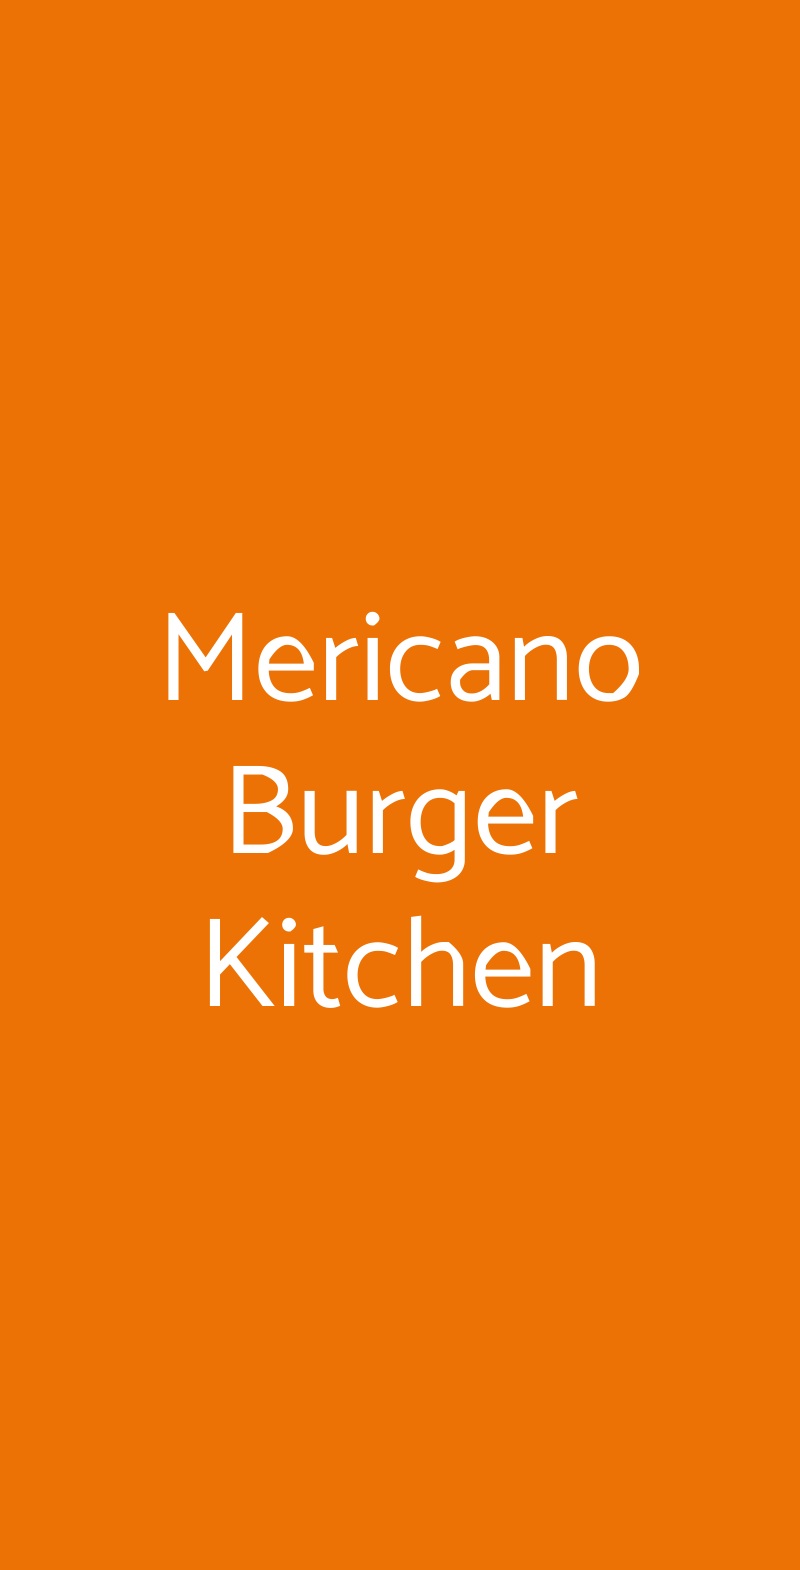 Mericano Burger Kitchen Napoli menù 1 pagina